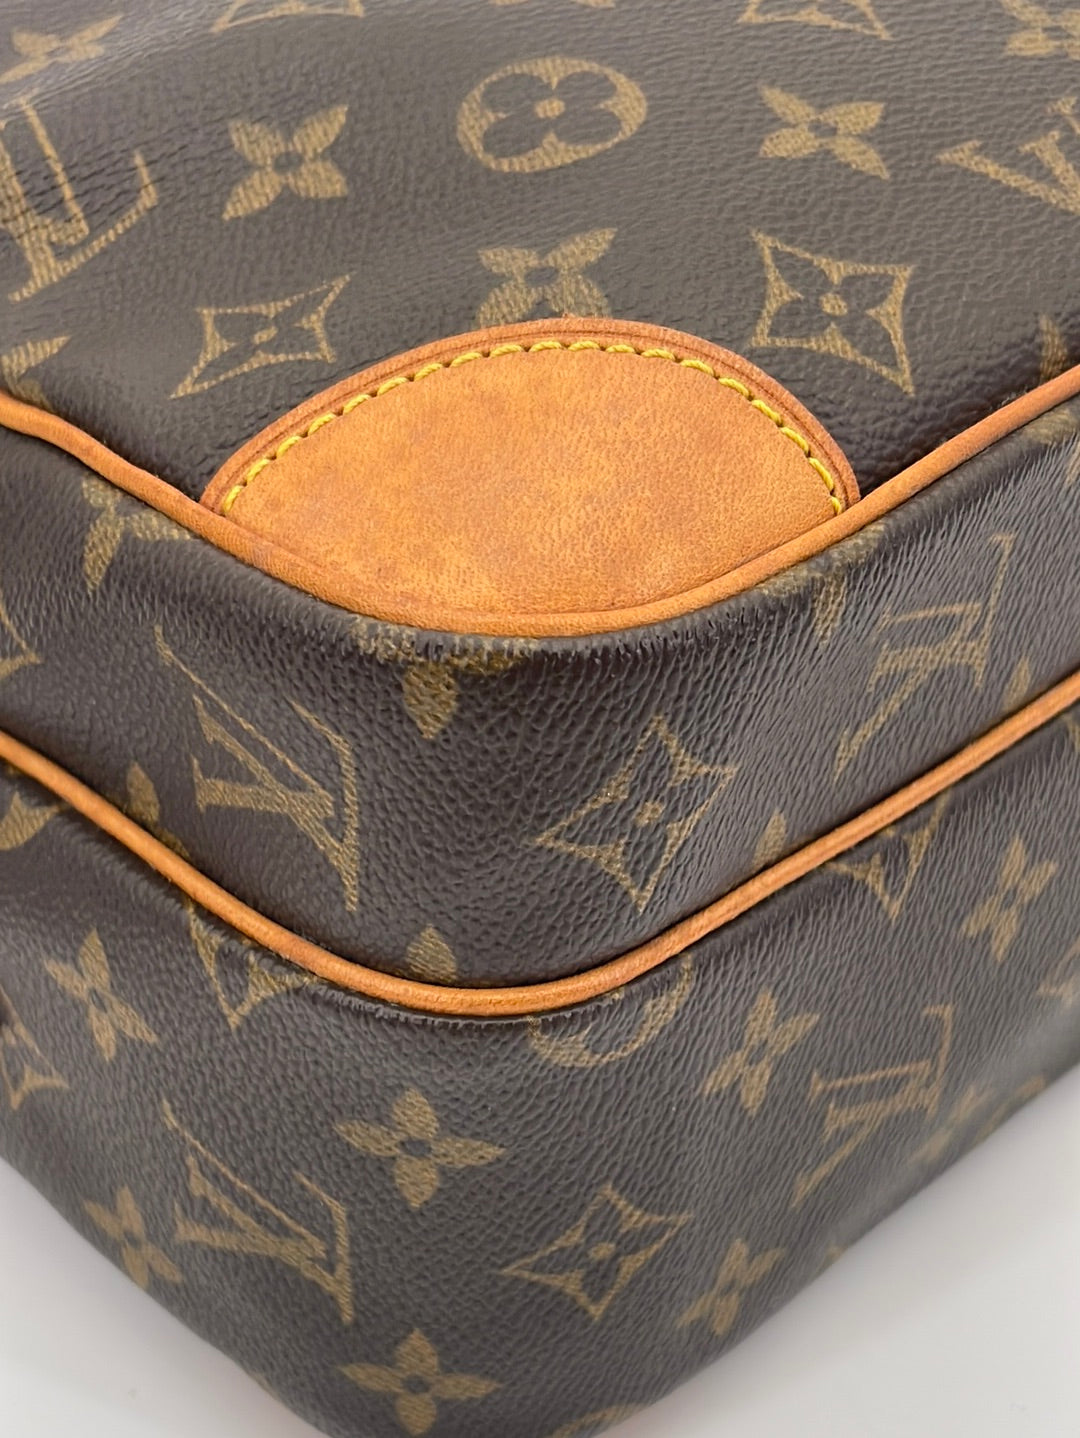 What Goes Around Comes Around Louis Vuitton Monogram Nile Bag